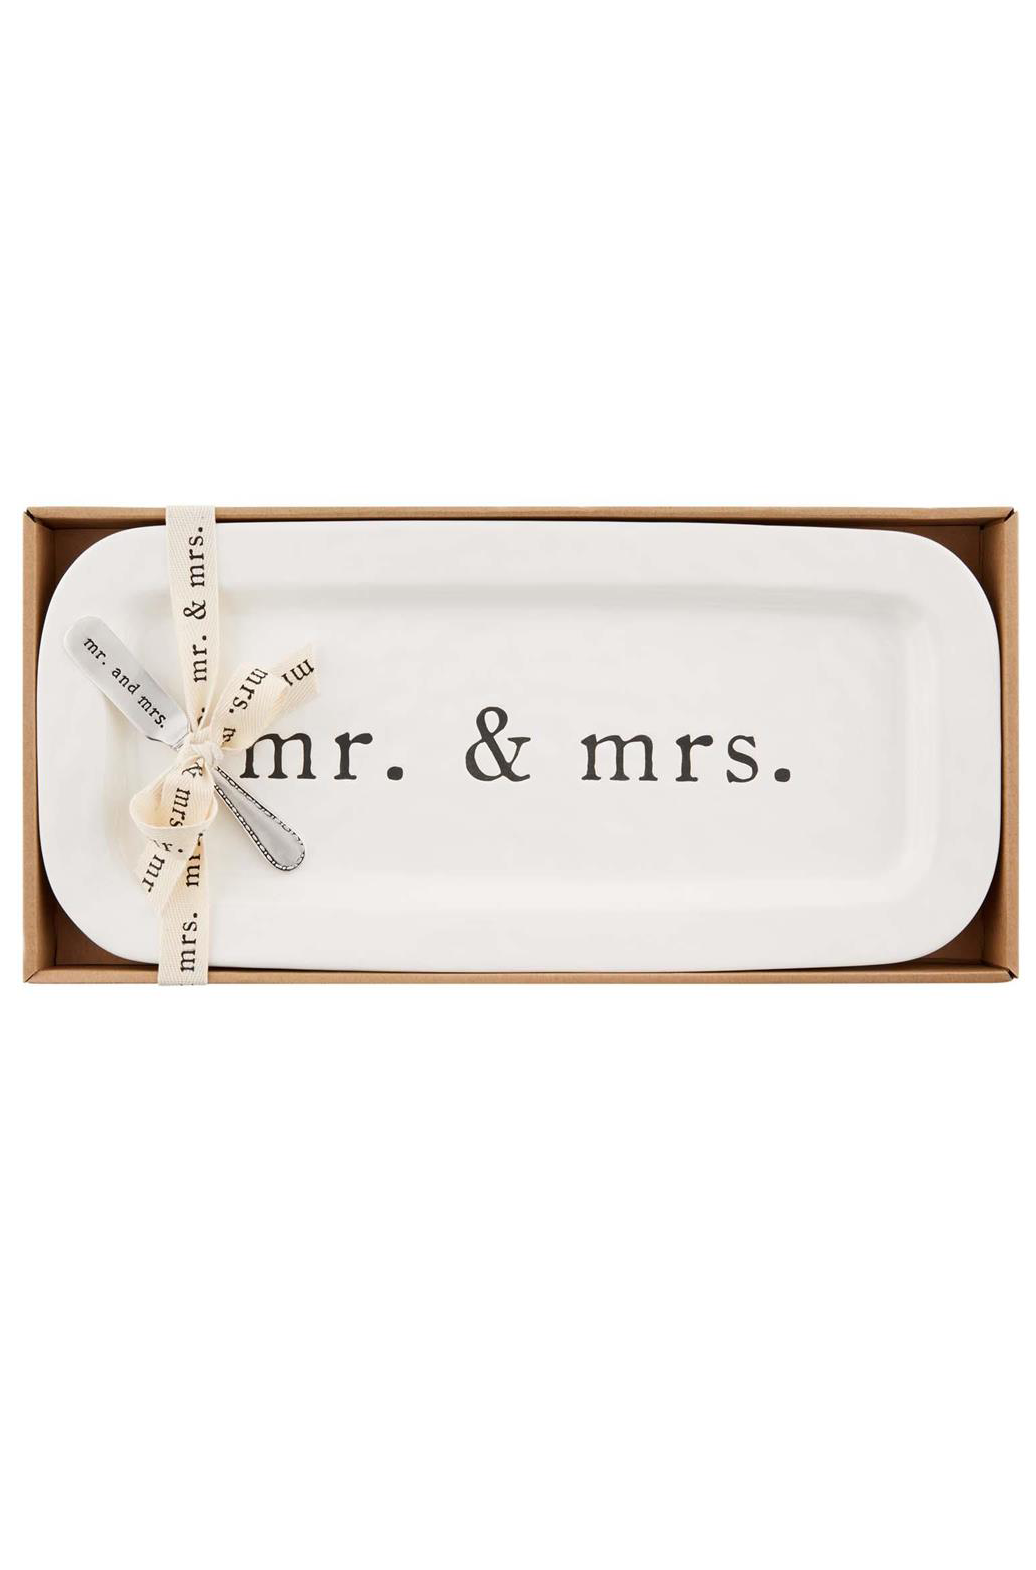 Mr. & Mrs. Hostess Set